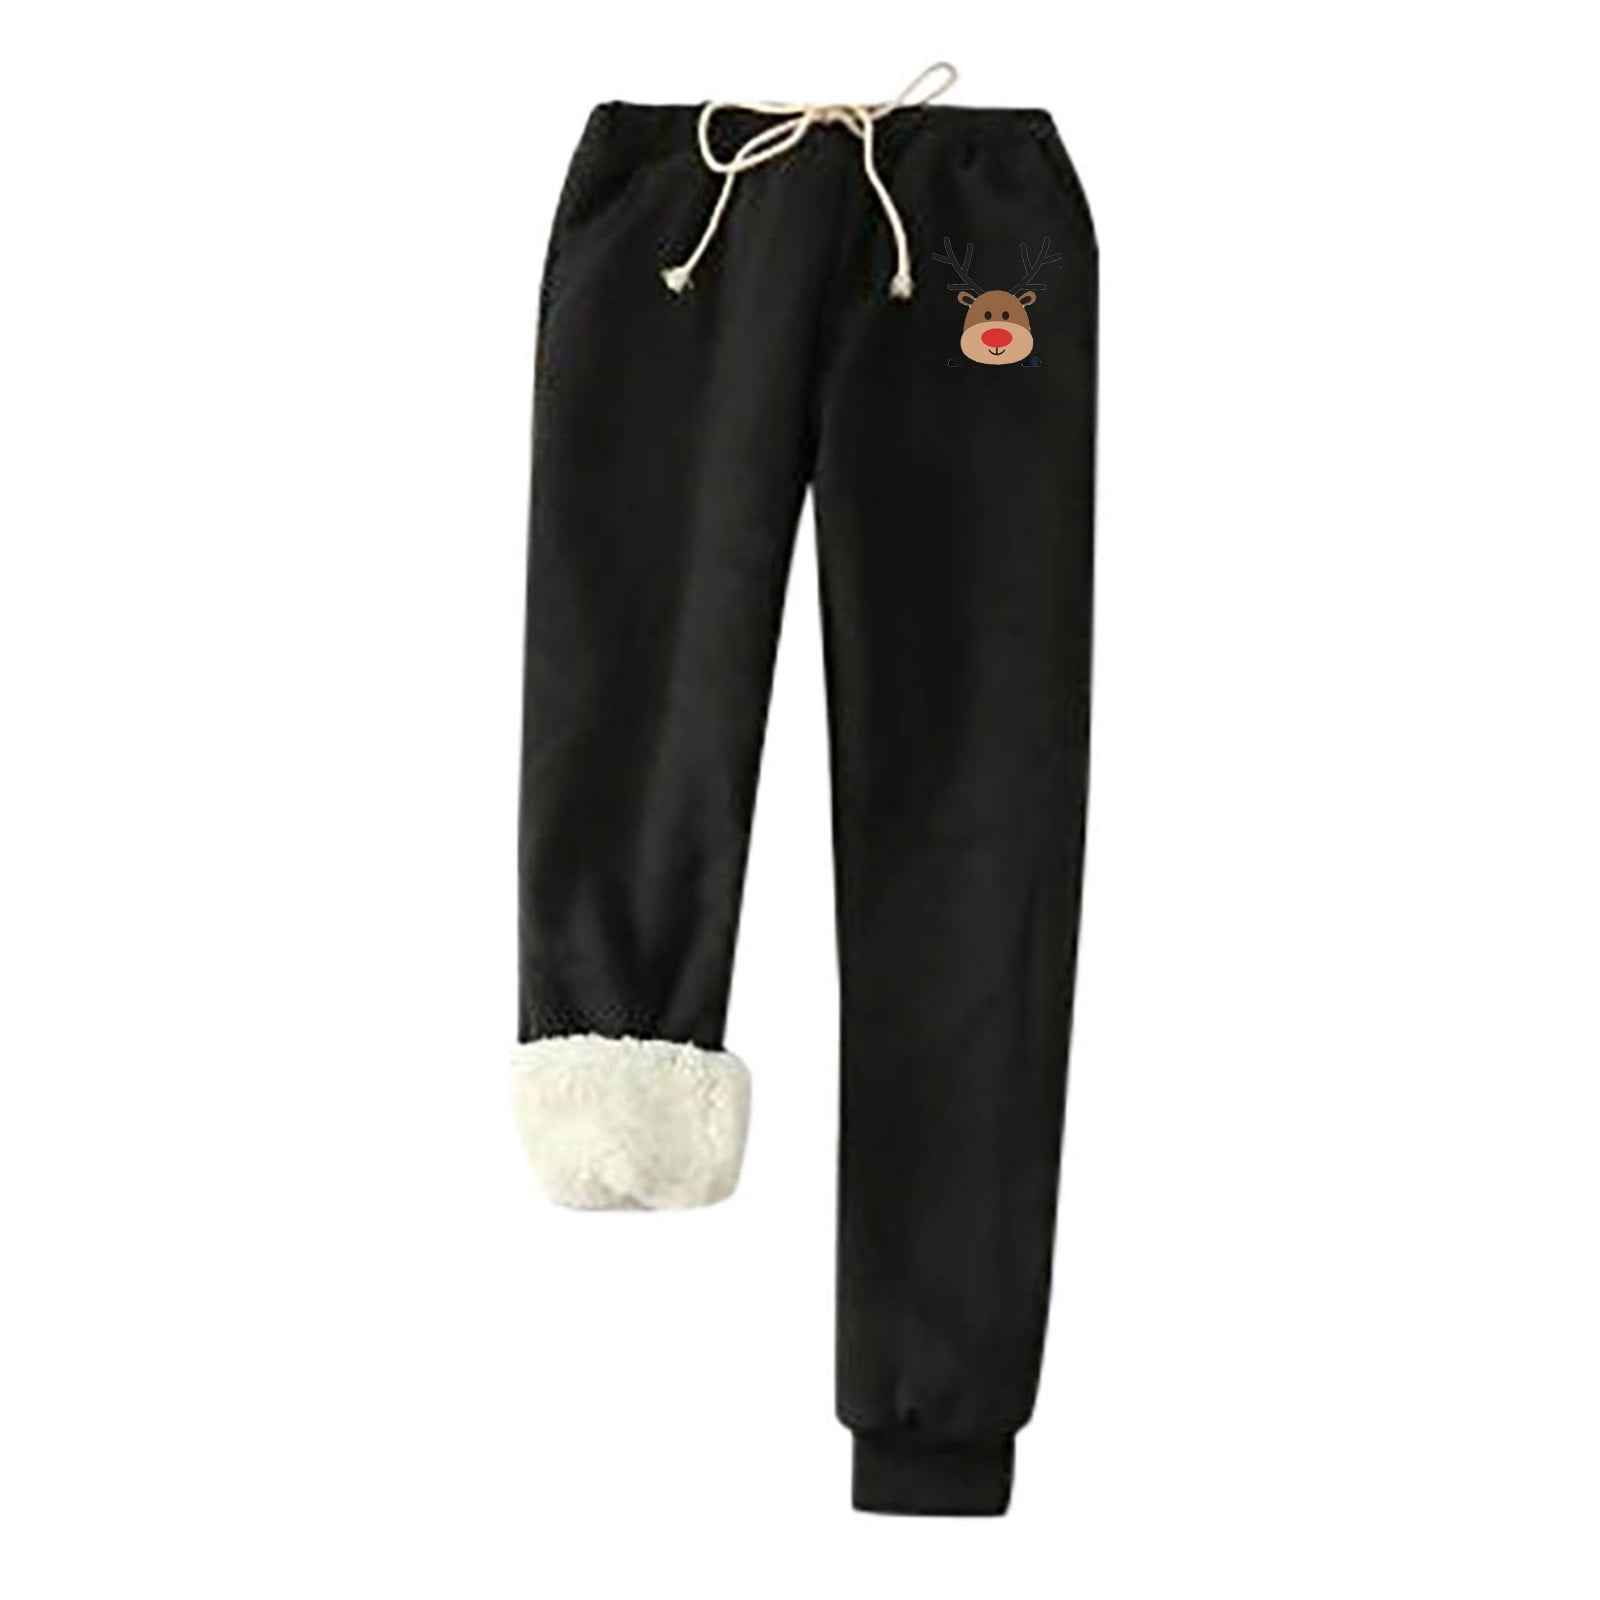 LELINTA Women's Winter Warm Track Pants Thermal Fleece Jogger Pants  Athletic Sweatpants with Pockets Workout Pants Running Pants 